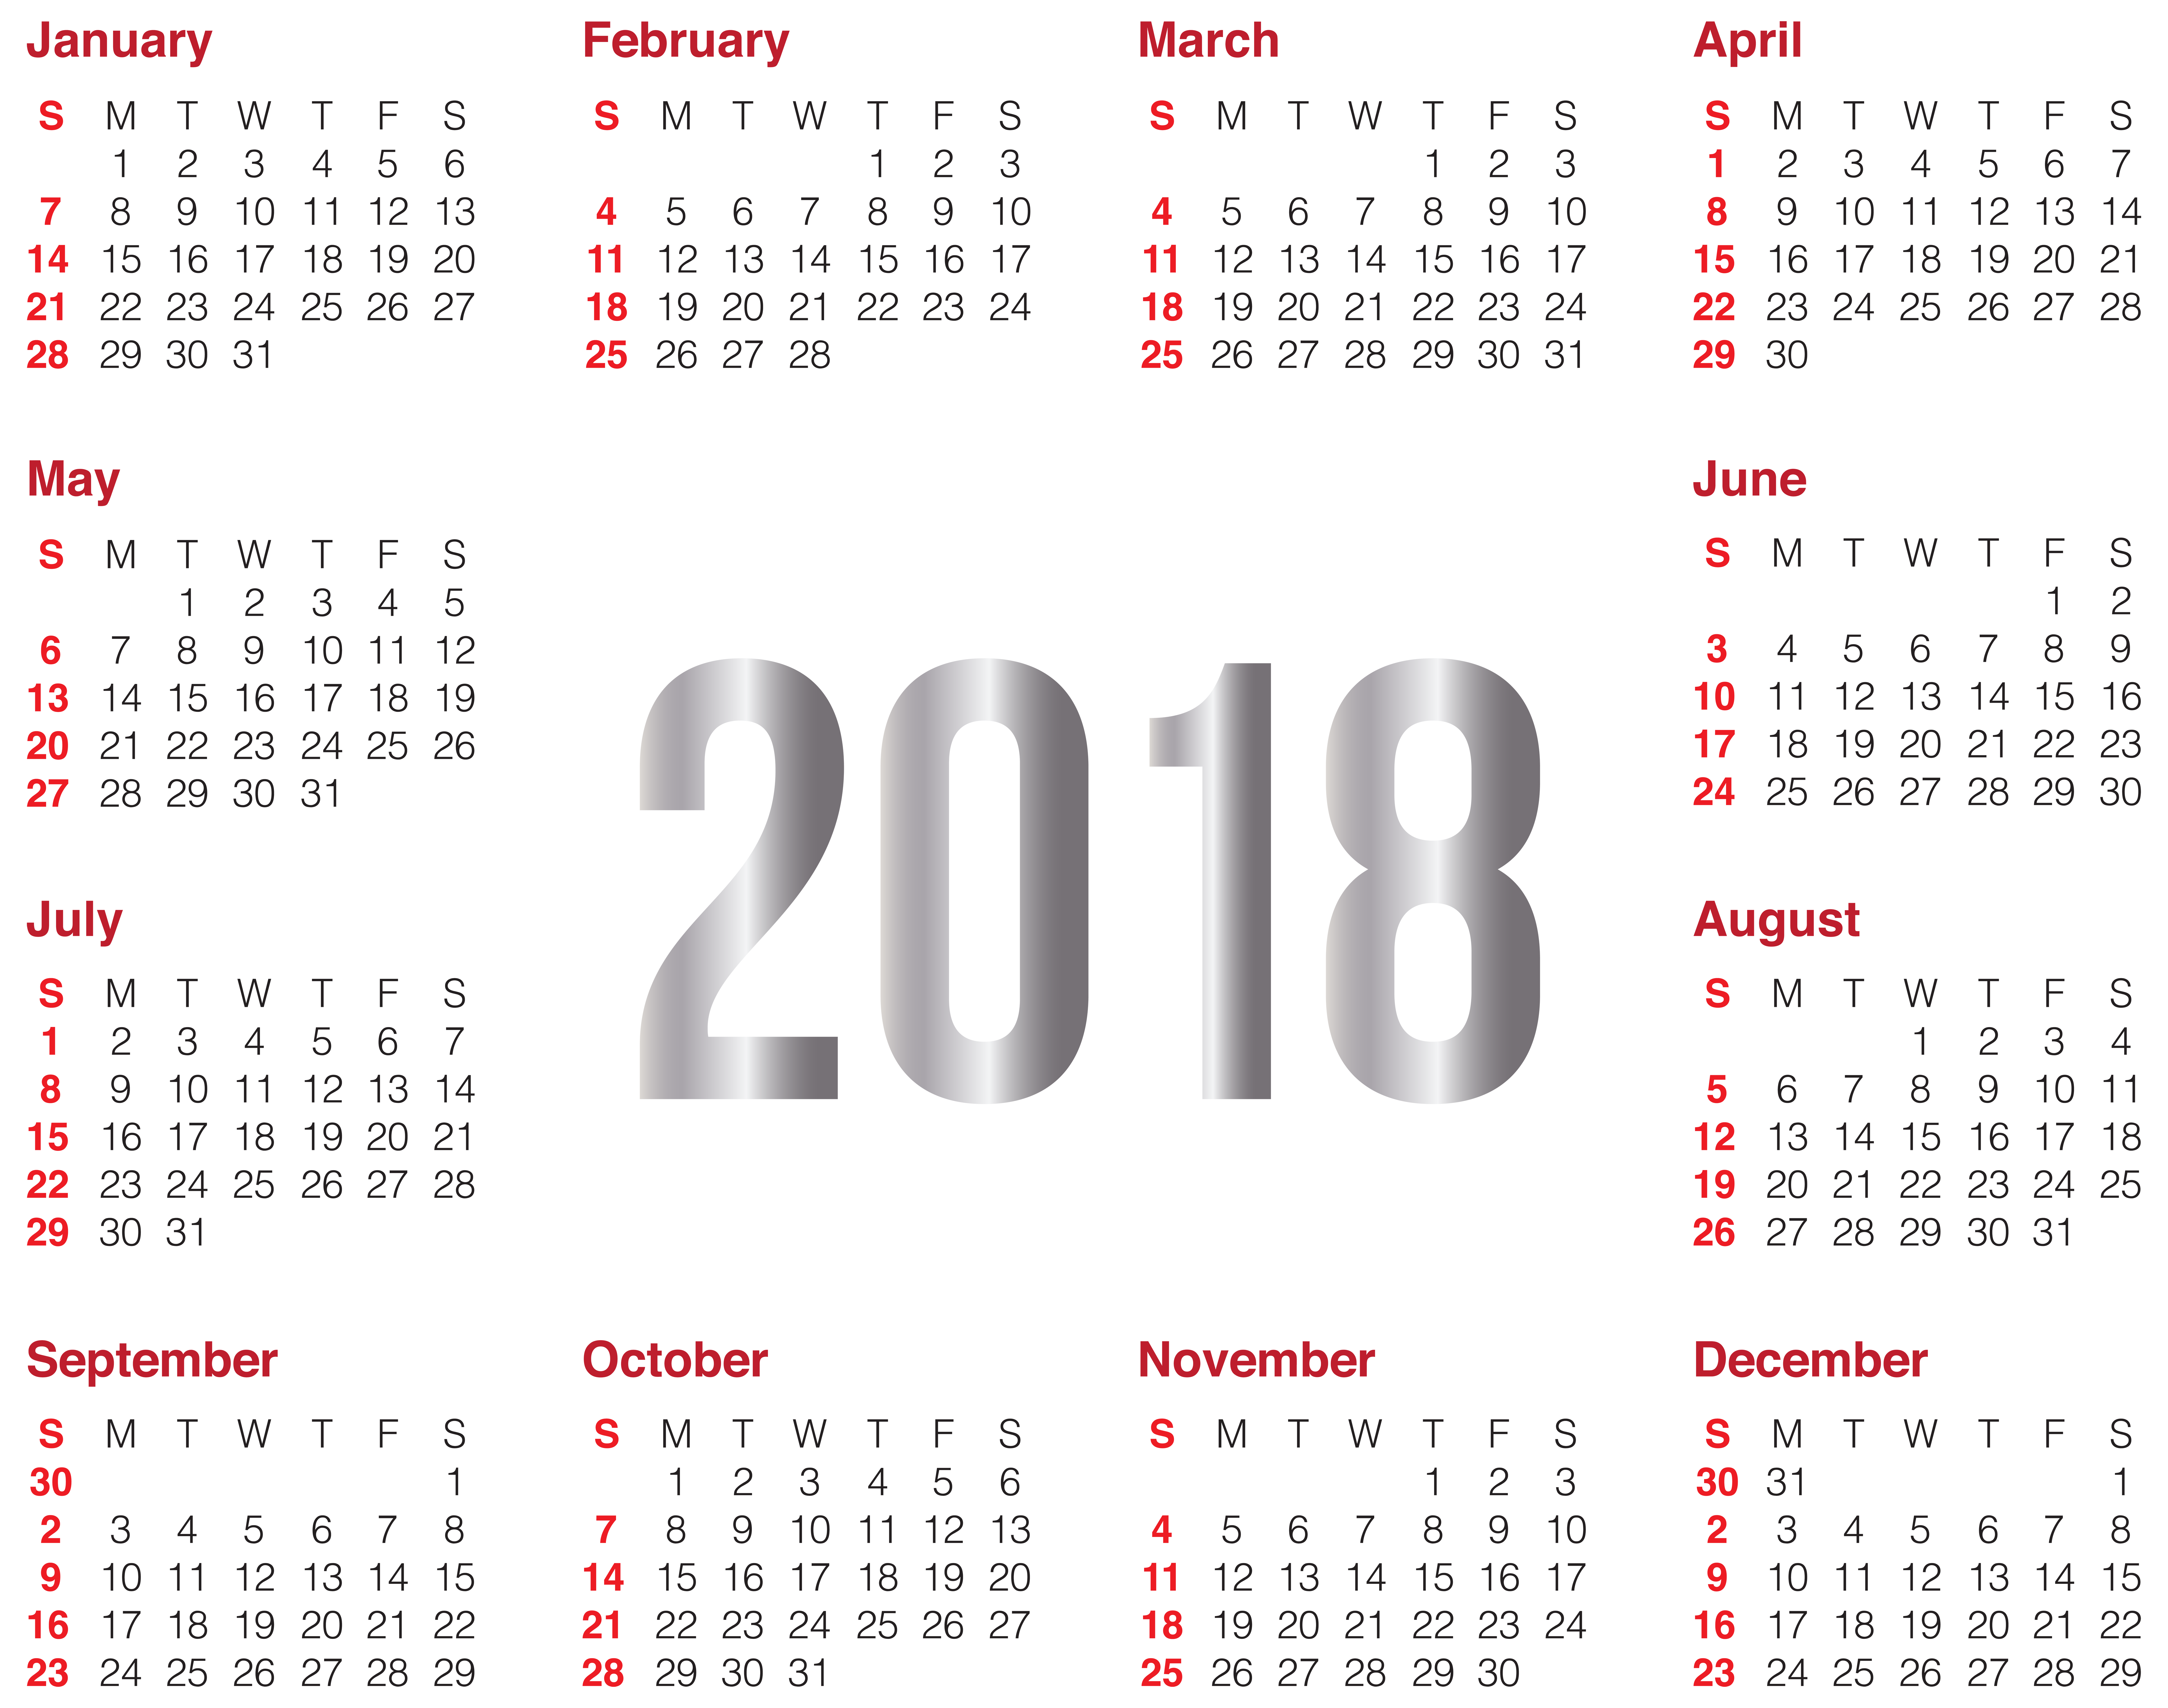 2018 Transparent Calendar PNG Clip Art Image | Gallery ...